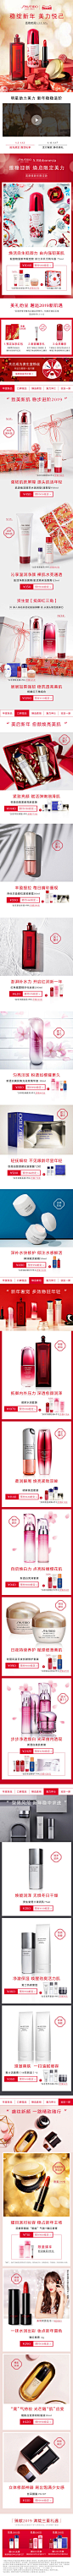 shiseido年货节预售